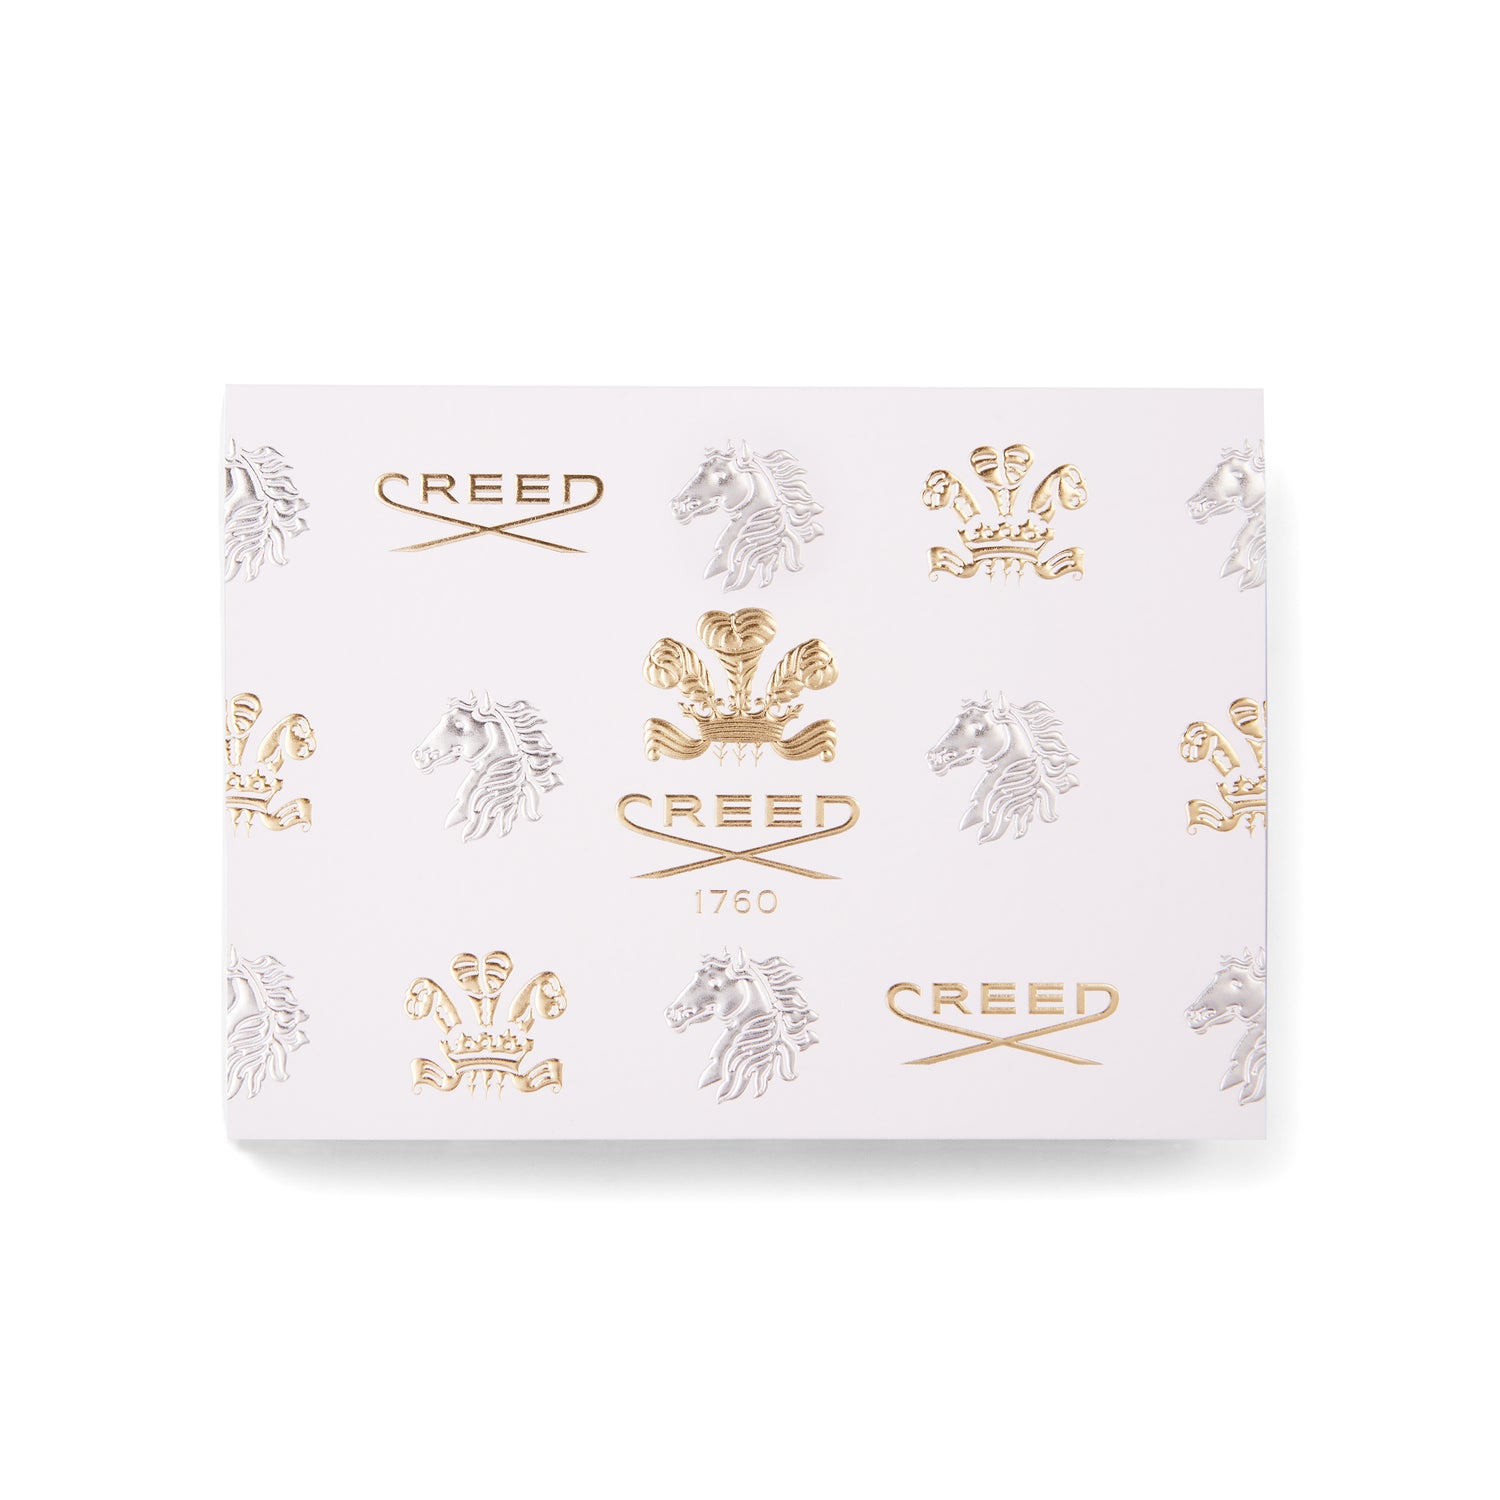 CREED For Her Eau de Parfum Fragrance Gift Set 5 x 10ml